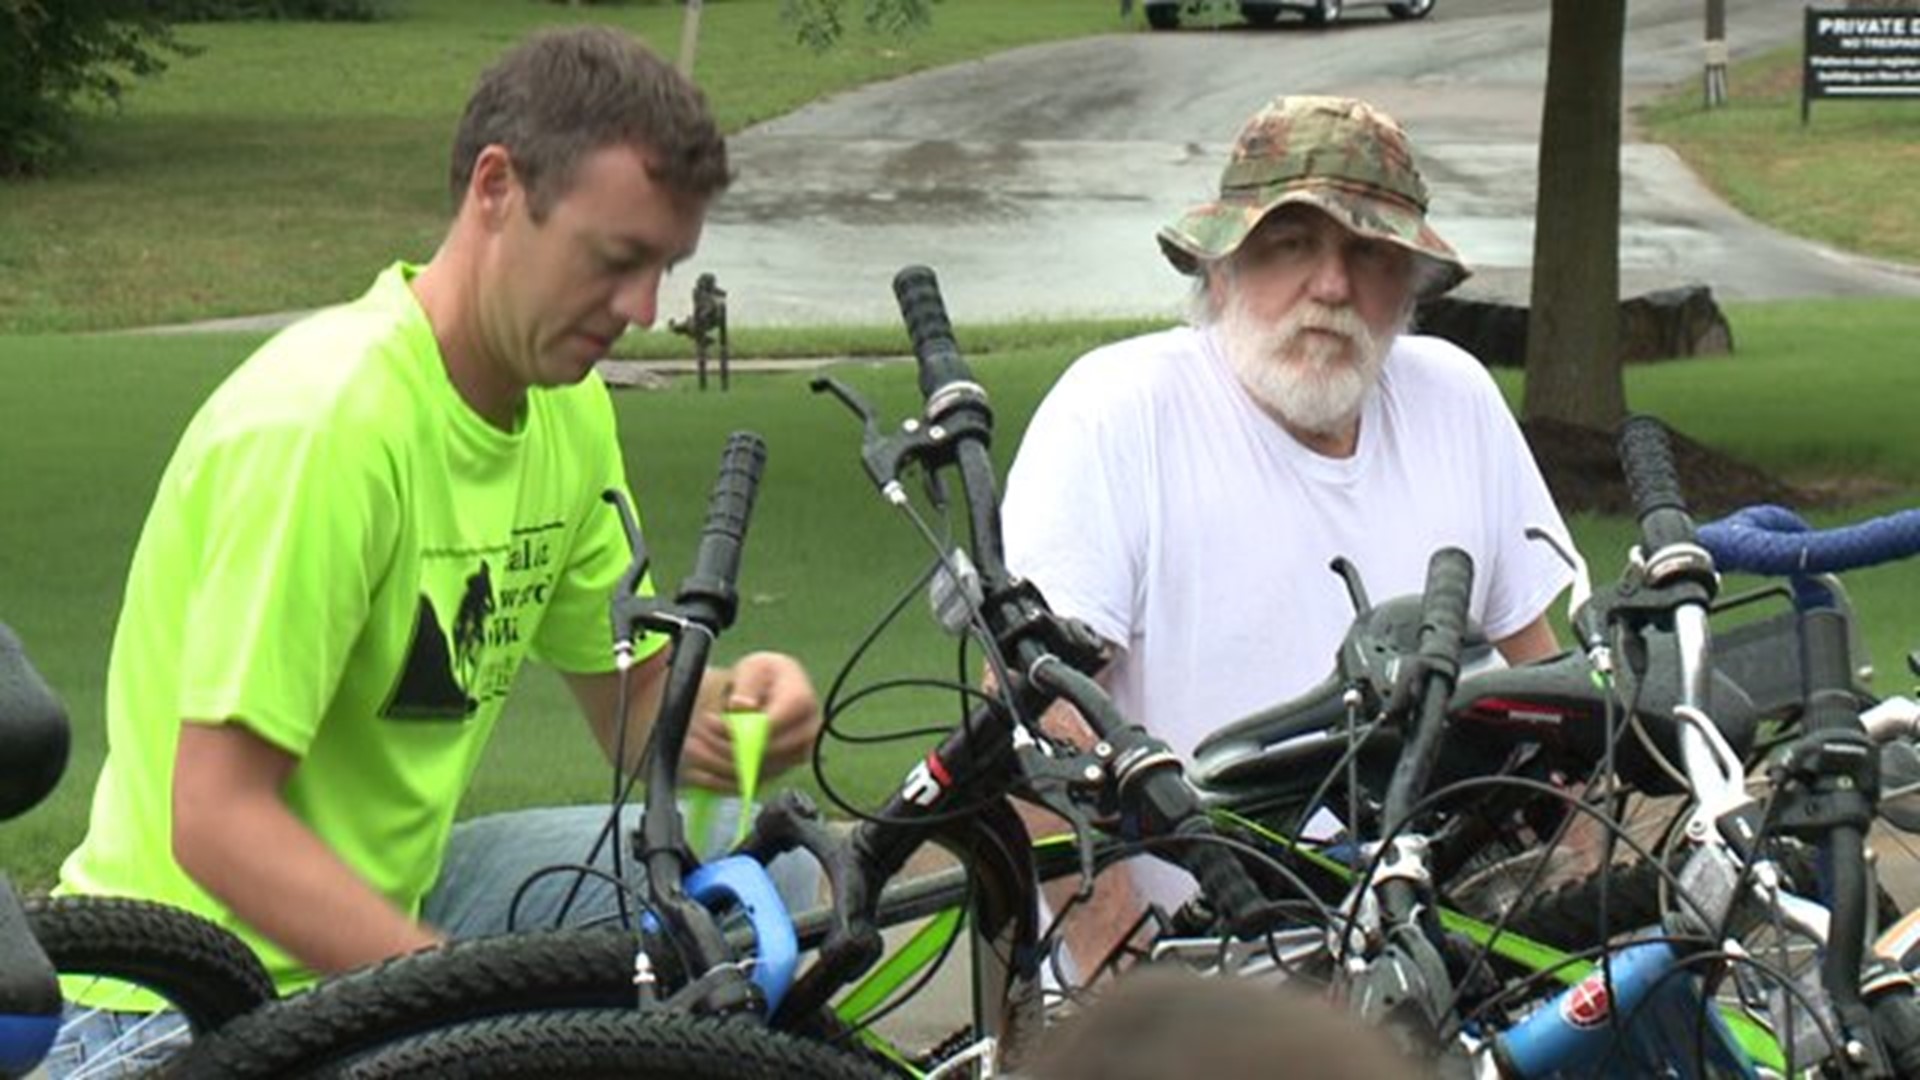 Local Group Donates Bikes To Veterans